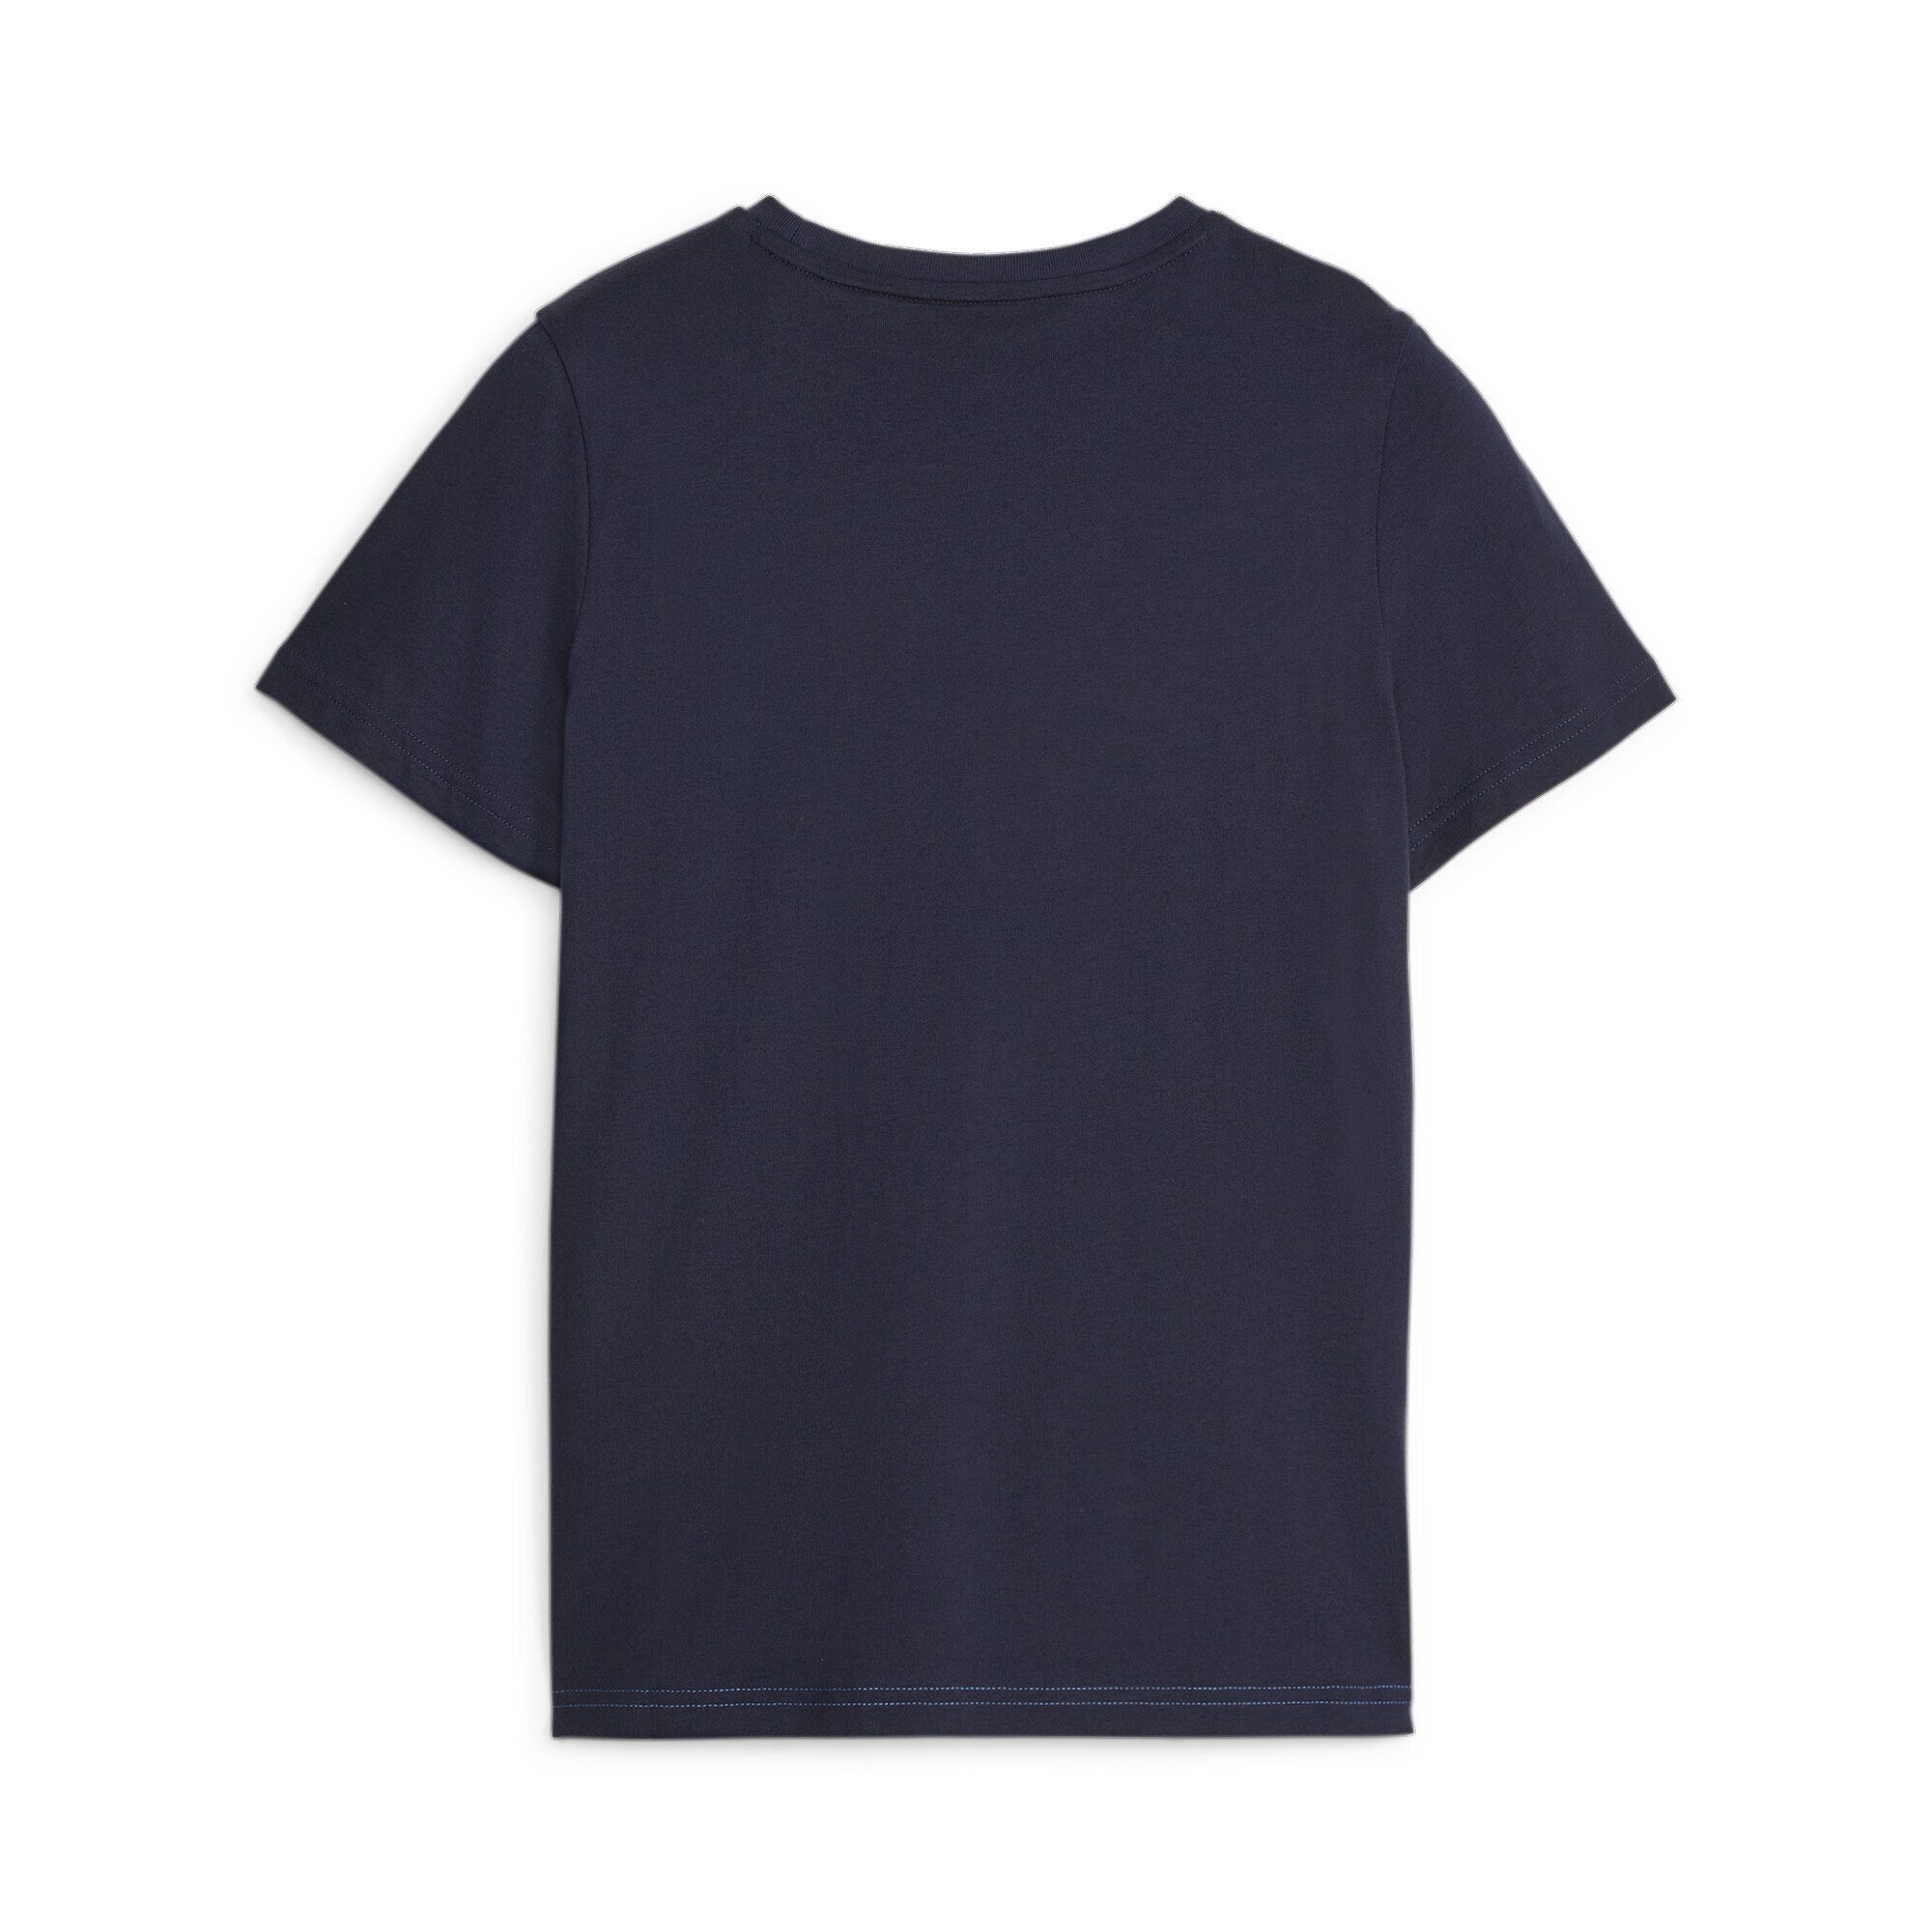 Essentials+ Jugendliche PUMA Blue T-Shirt Blockfarben Racing in T-Shirt Xx